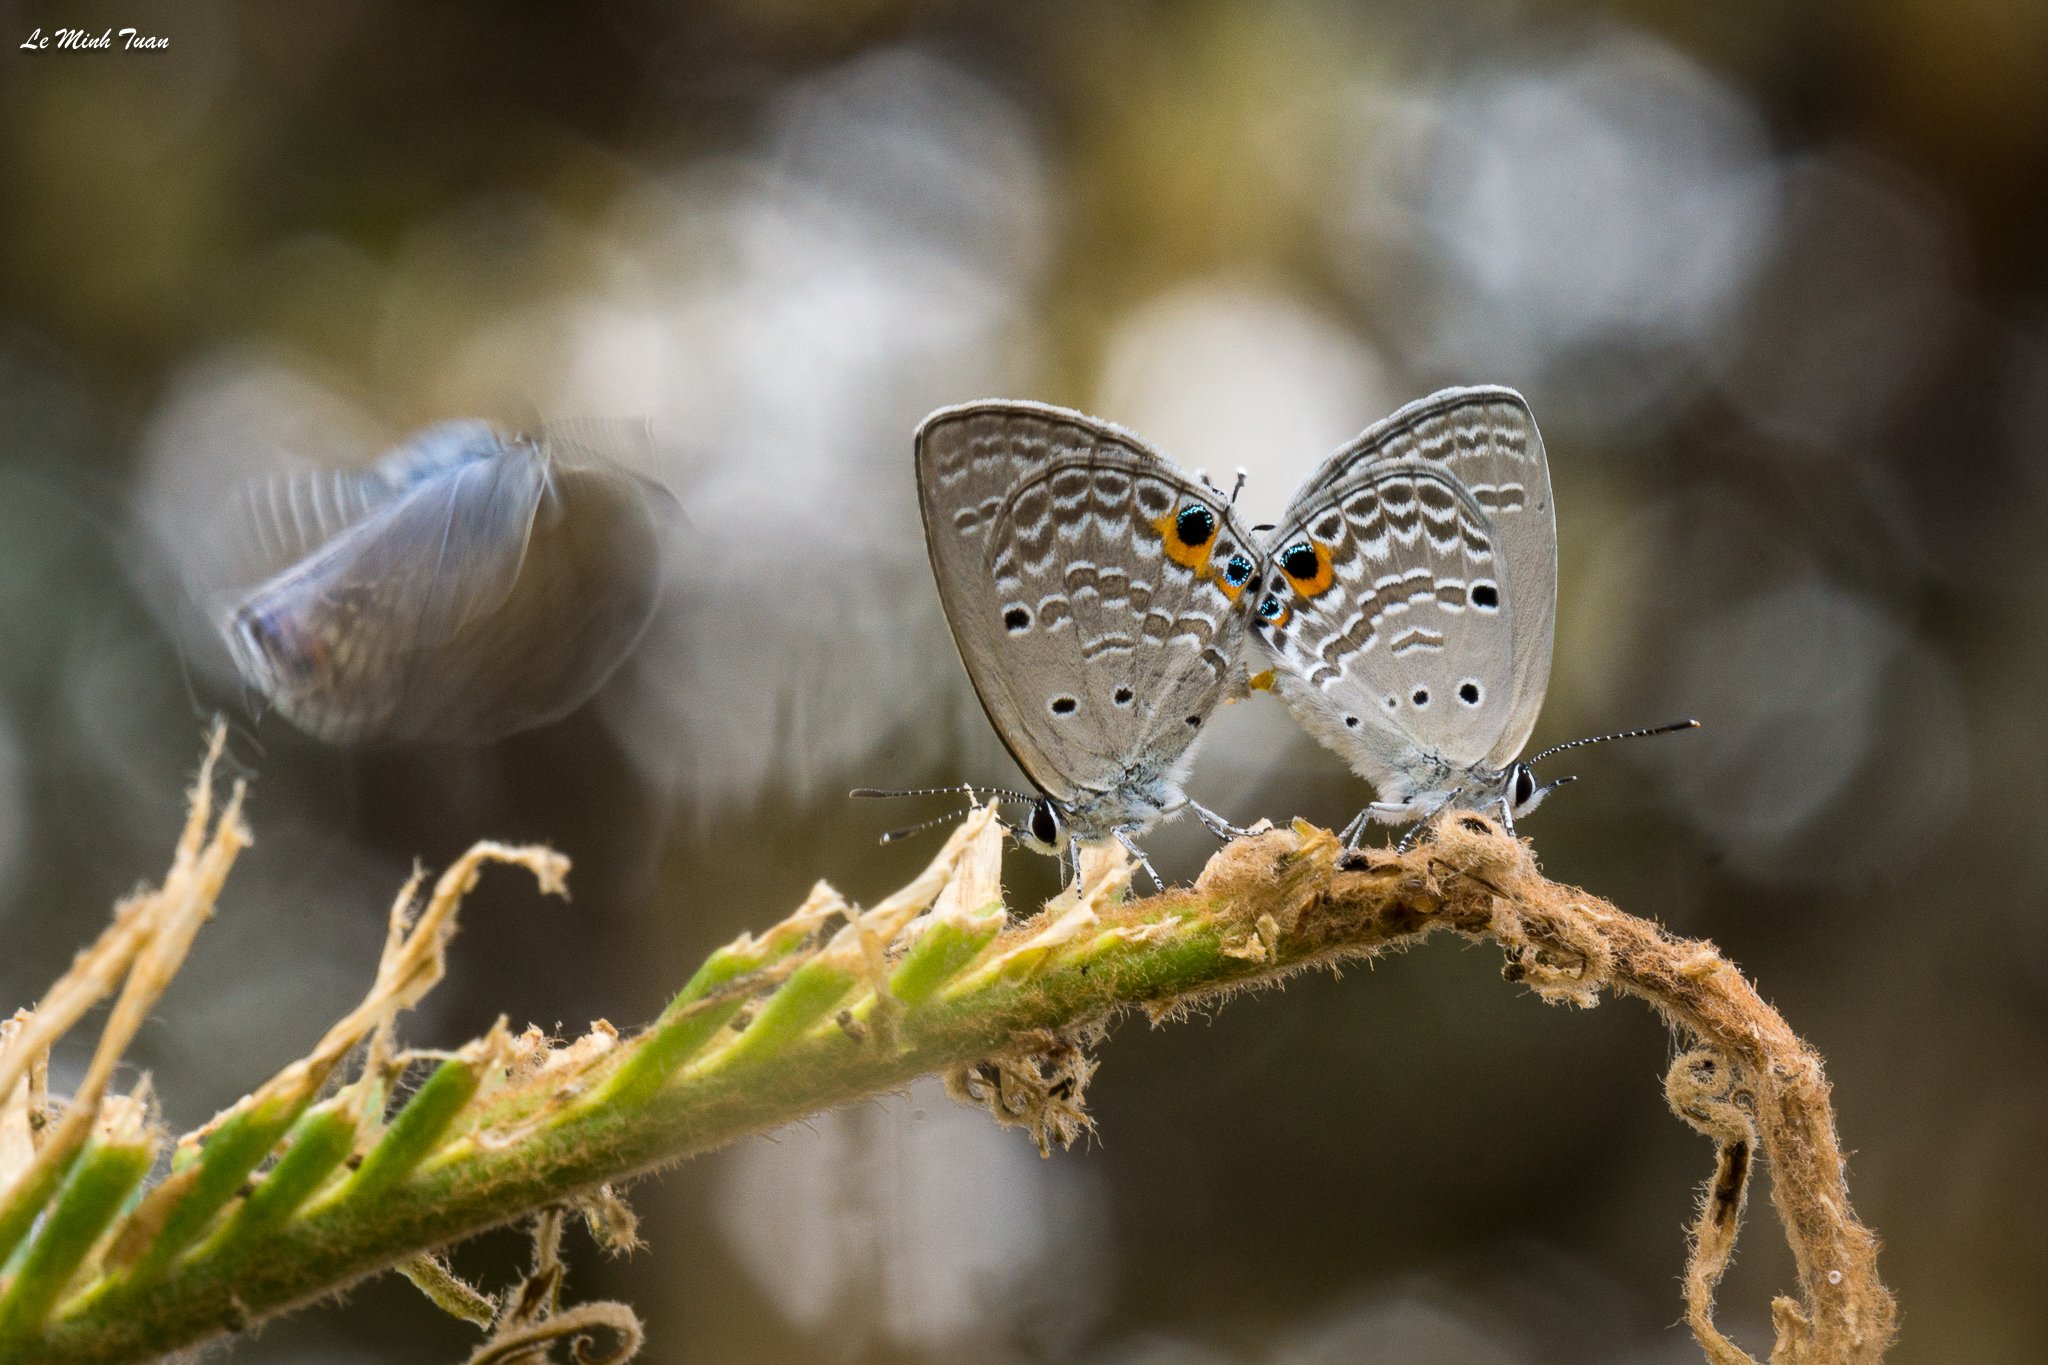 butterflies, Lê Minh Tuấn